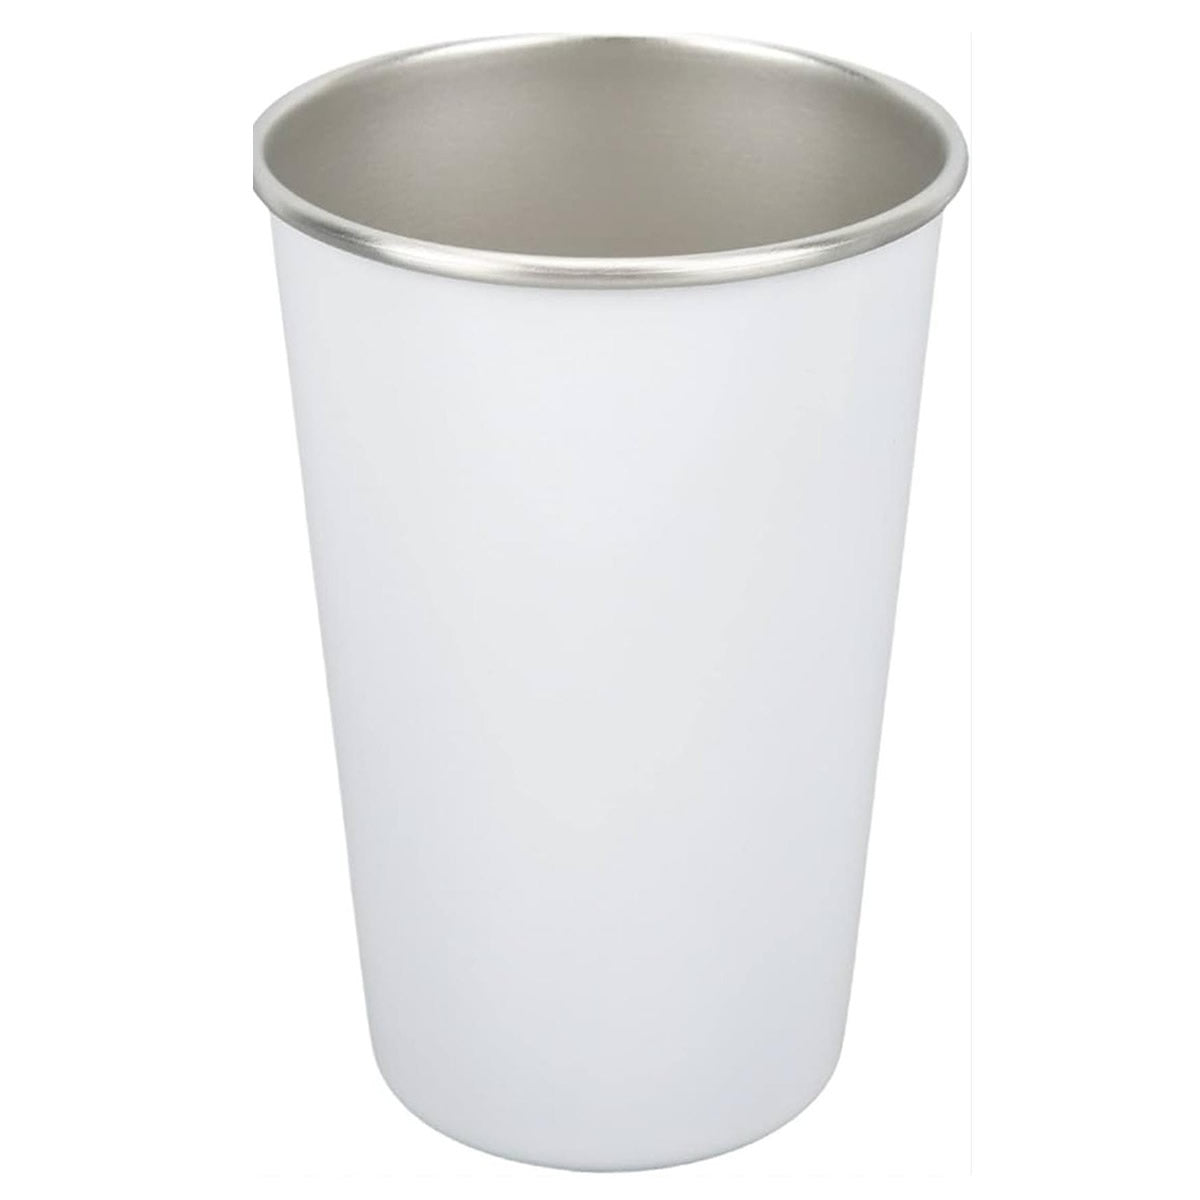 FYB-500 - 16oz Stainless Steel Pint Cup